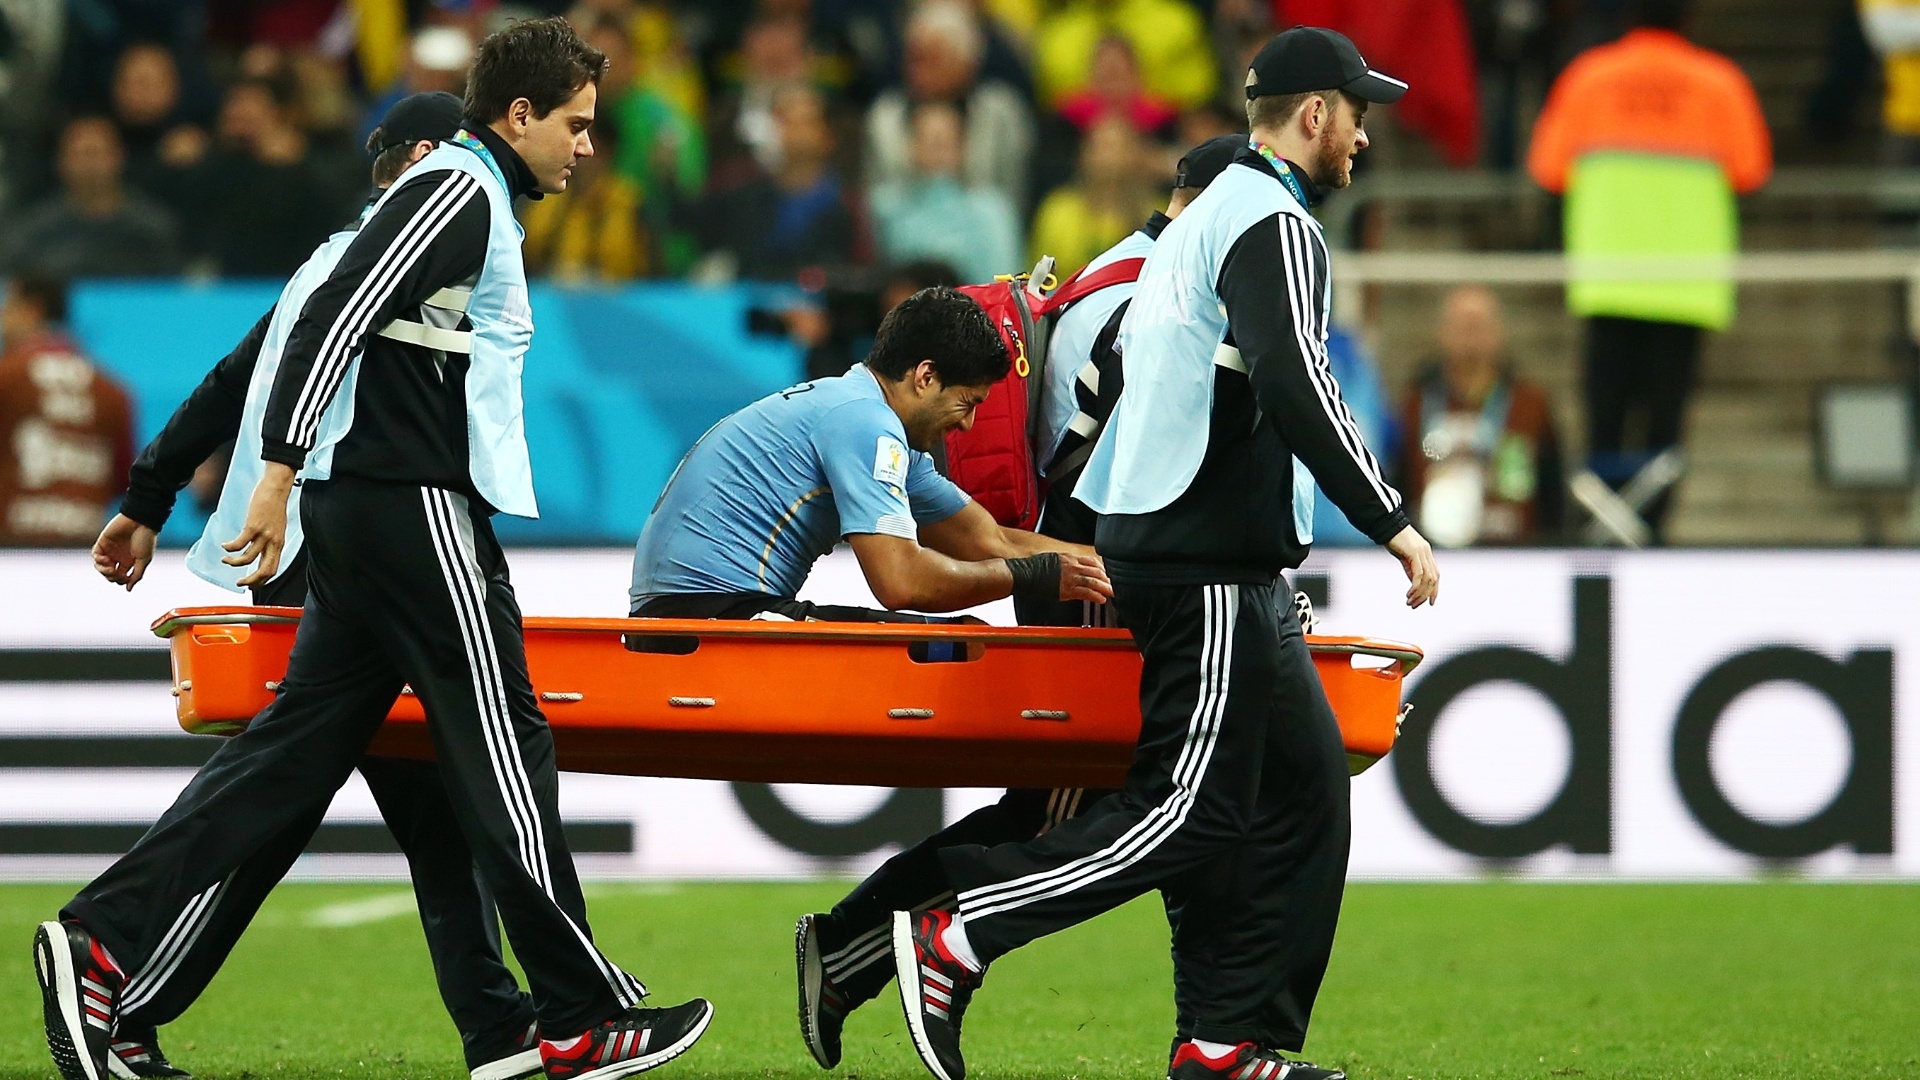 19.jun.2014 - Luis Suárez deixa o gramado de maca durante a vitória uruguaia. O atacante marcou os dois gols contra a Inglaterra